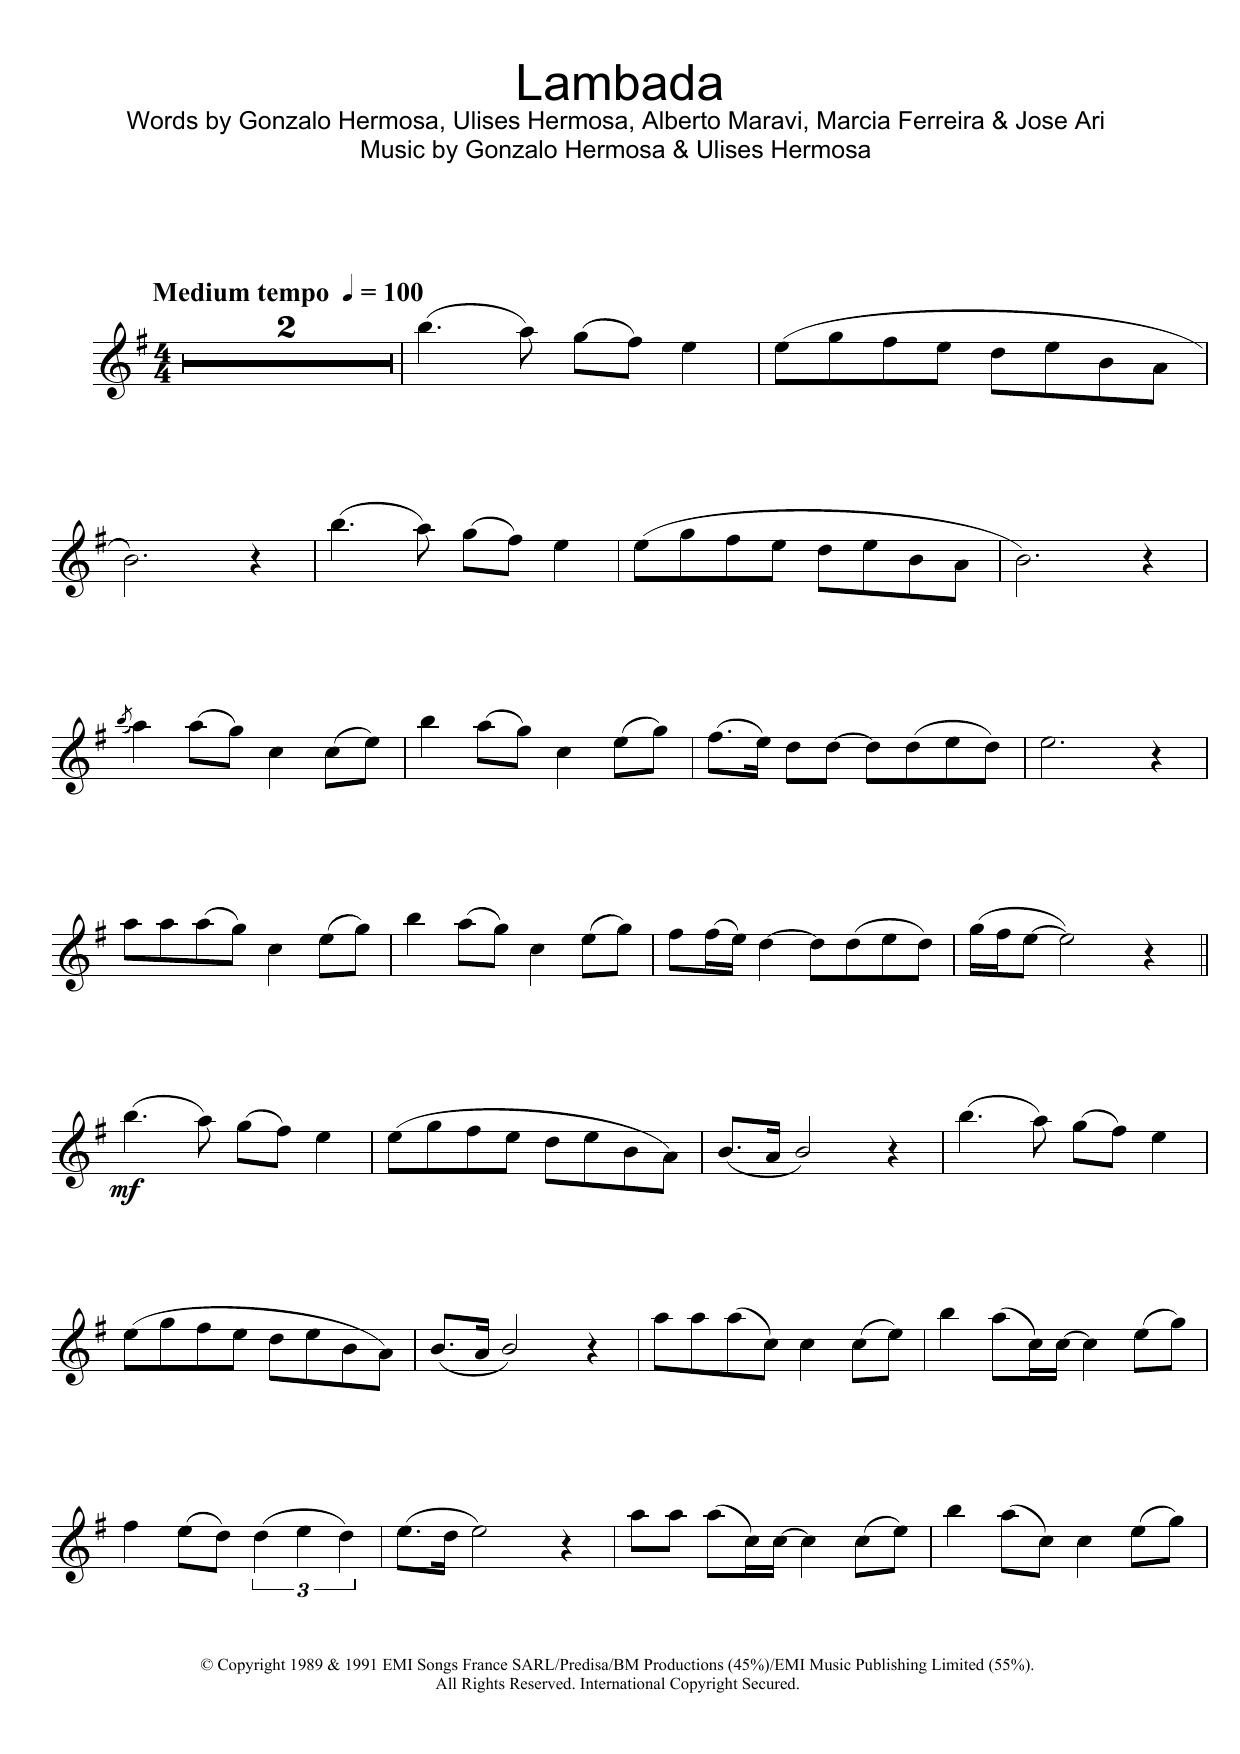 Kaoma Lambada Sheet Music Notes & Chords for Saxophone - Download or Print PDF